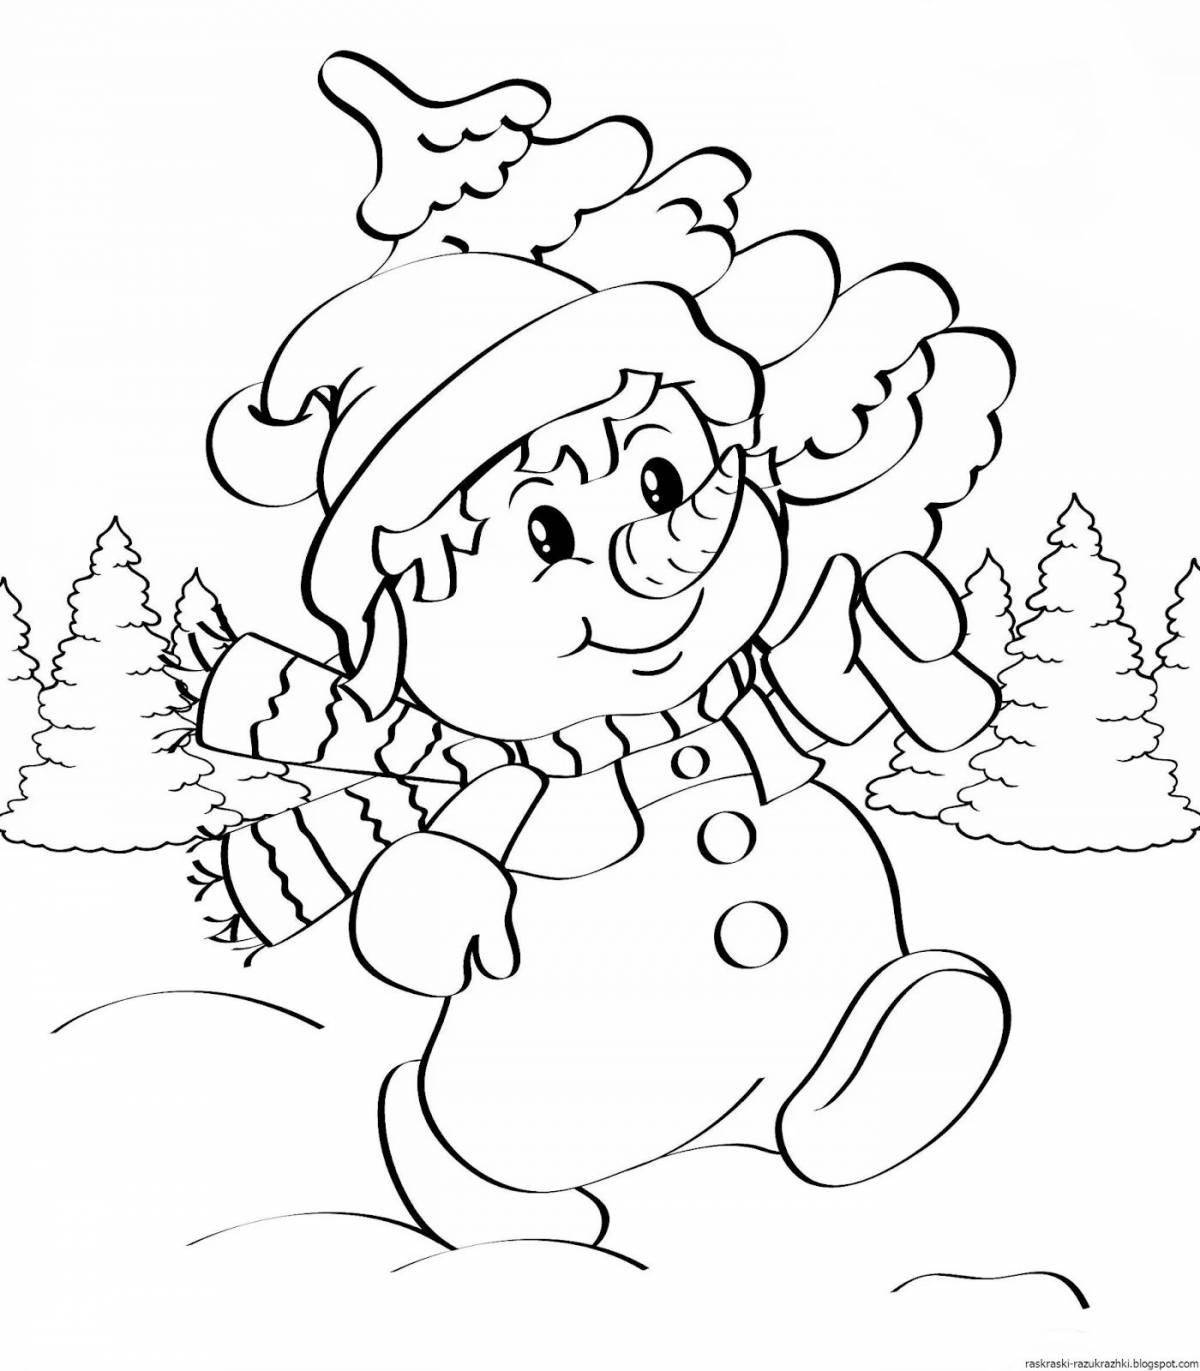 Festive children's Christmas coloring book